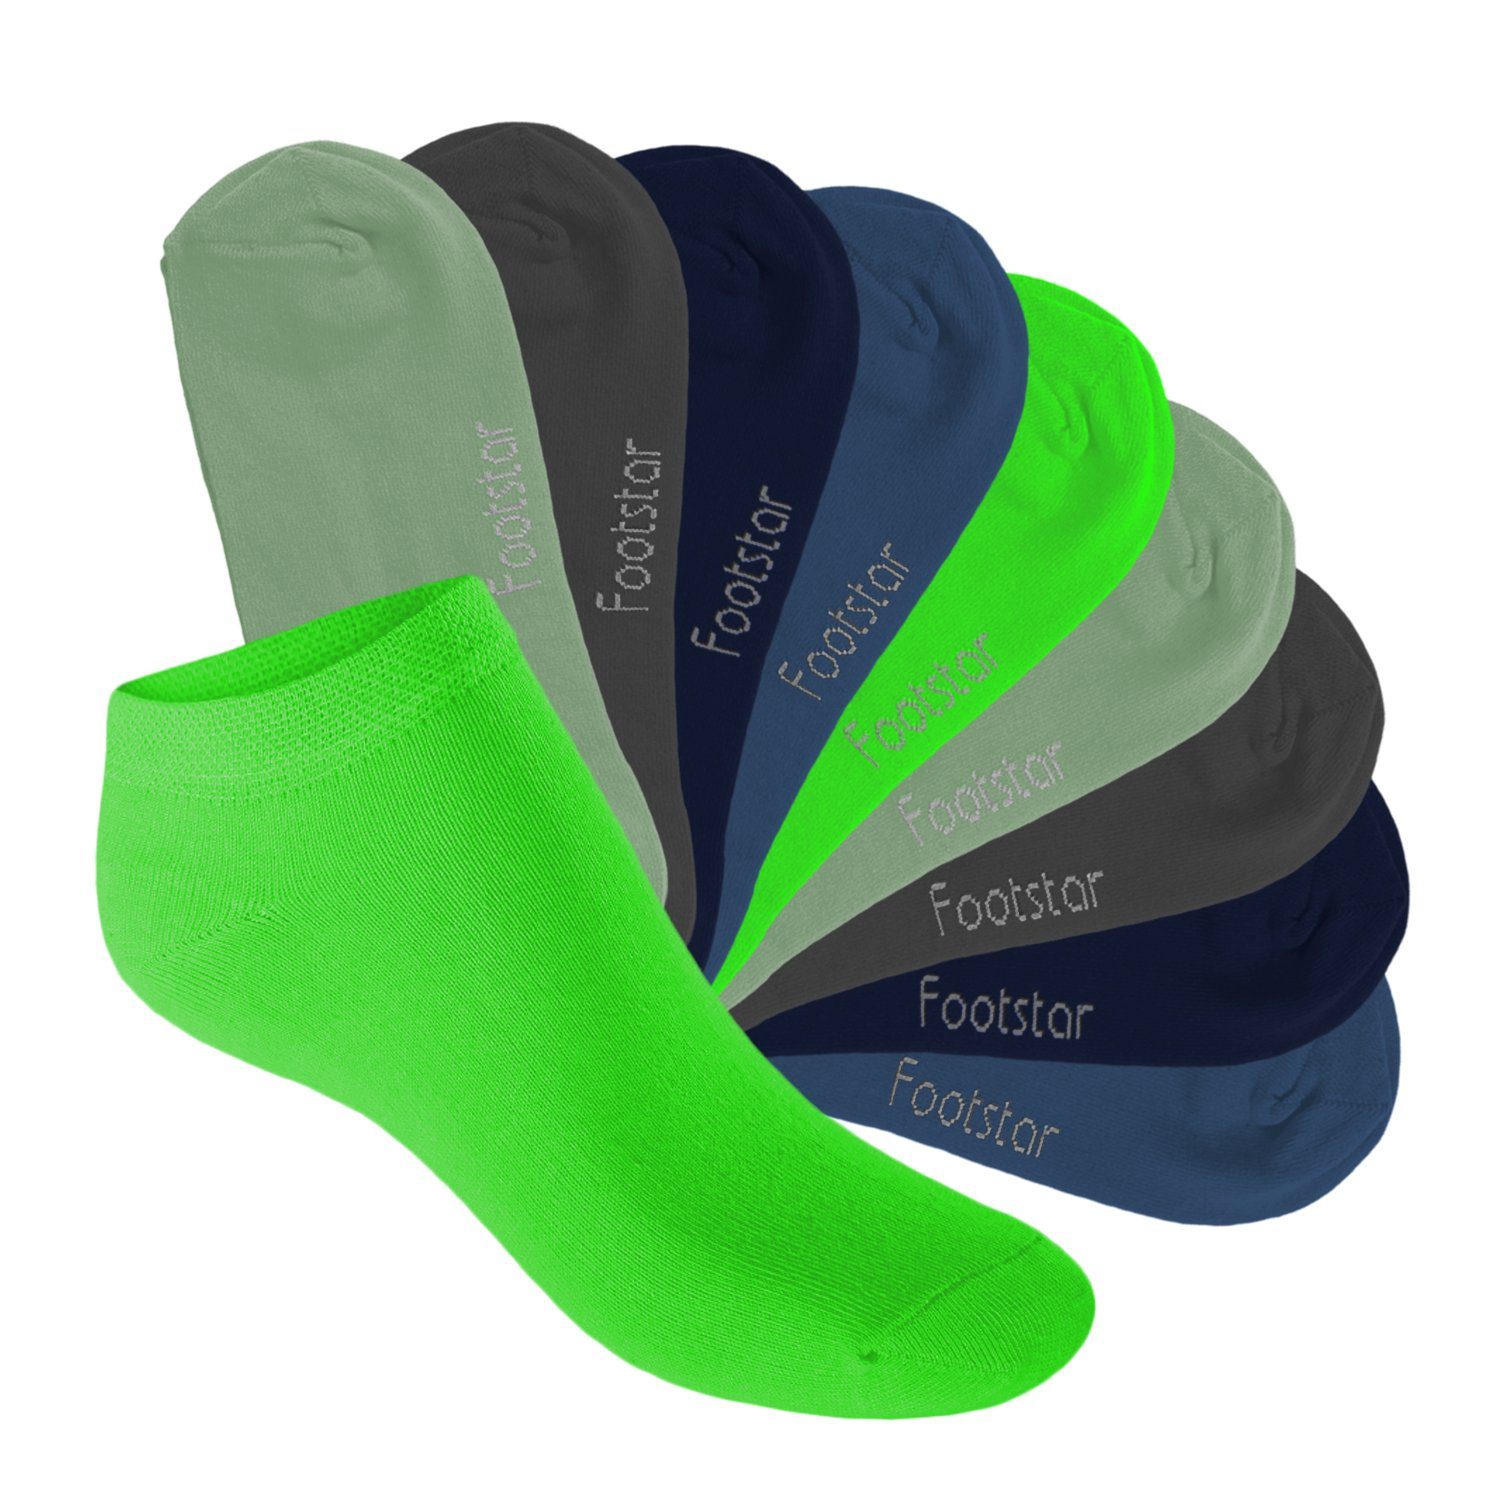 Footstar Kurzsocken Kinder Sneaker Socken (10 Paar) - Kurze Socken für Kids Cool Colours